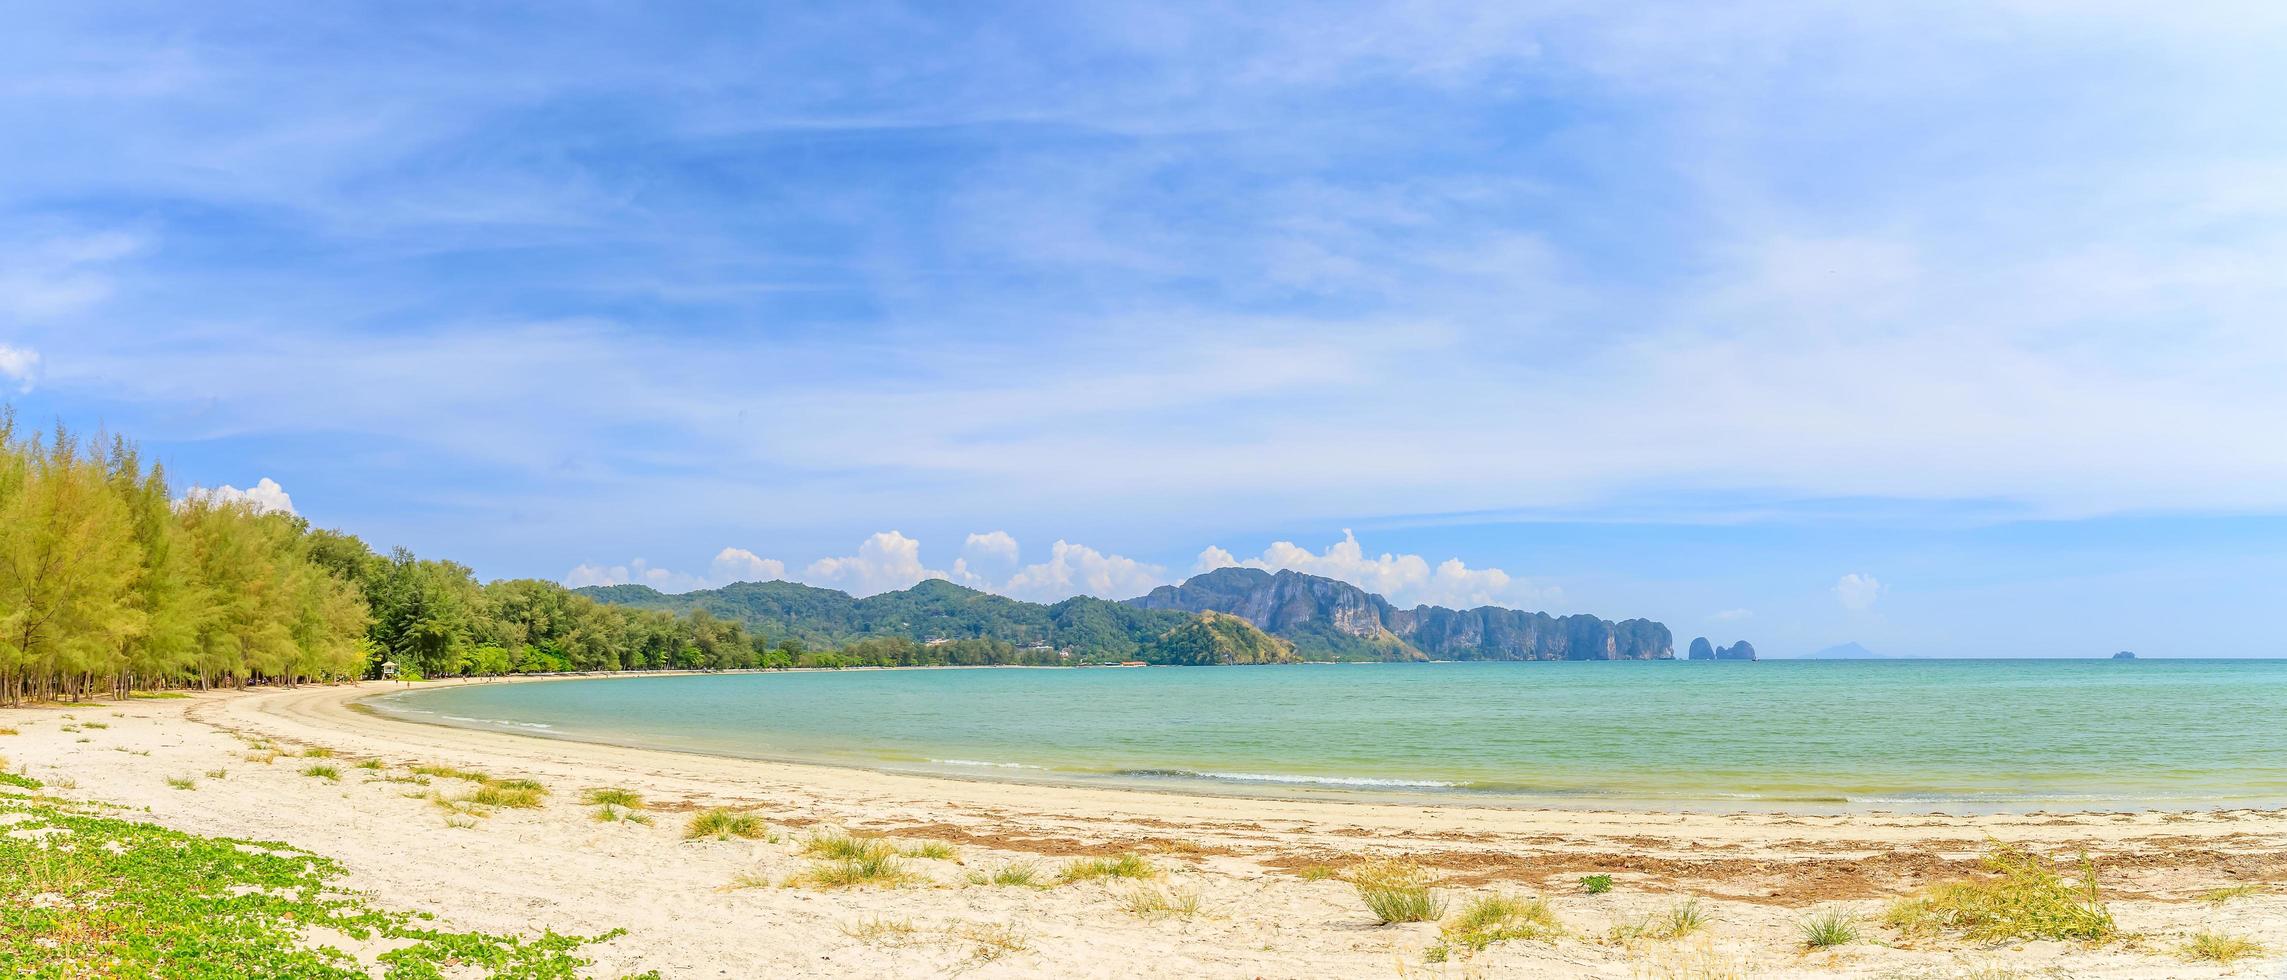 noppharat thara beach, krabi, thailand, panorama foto